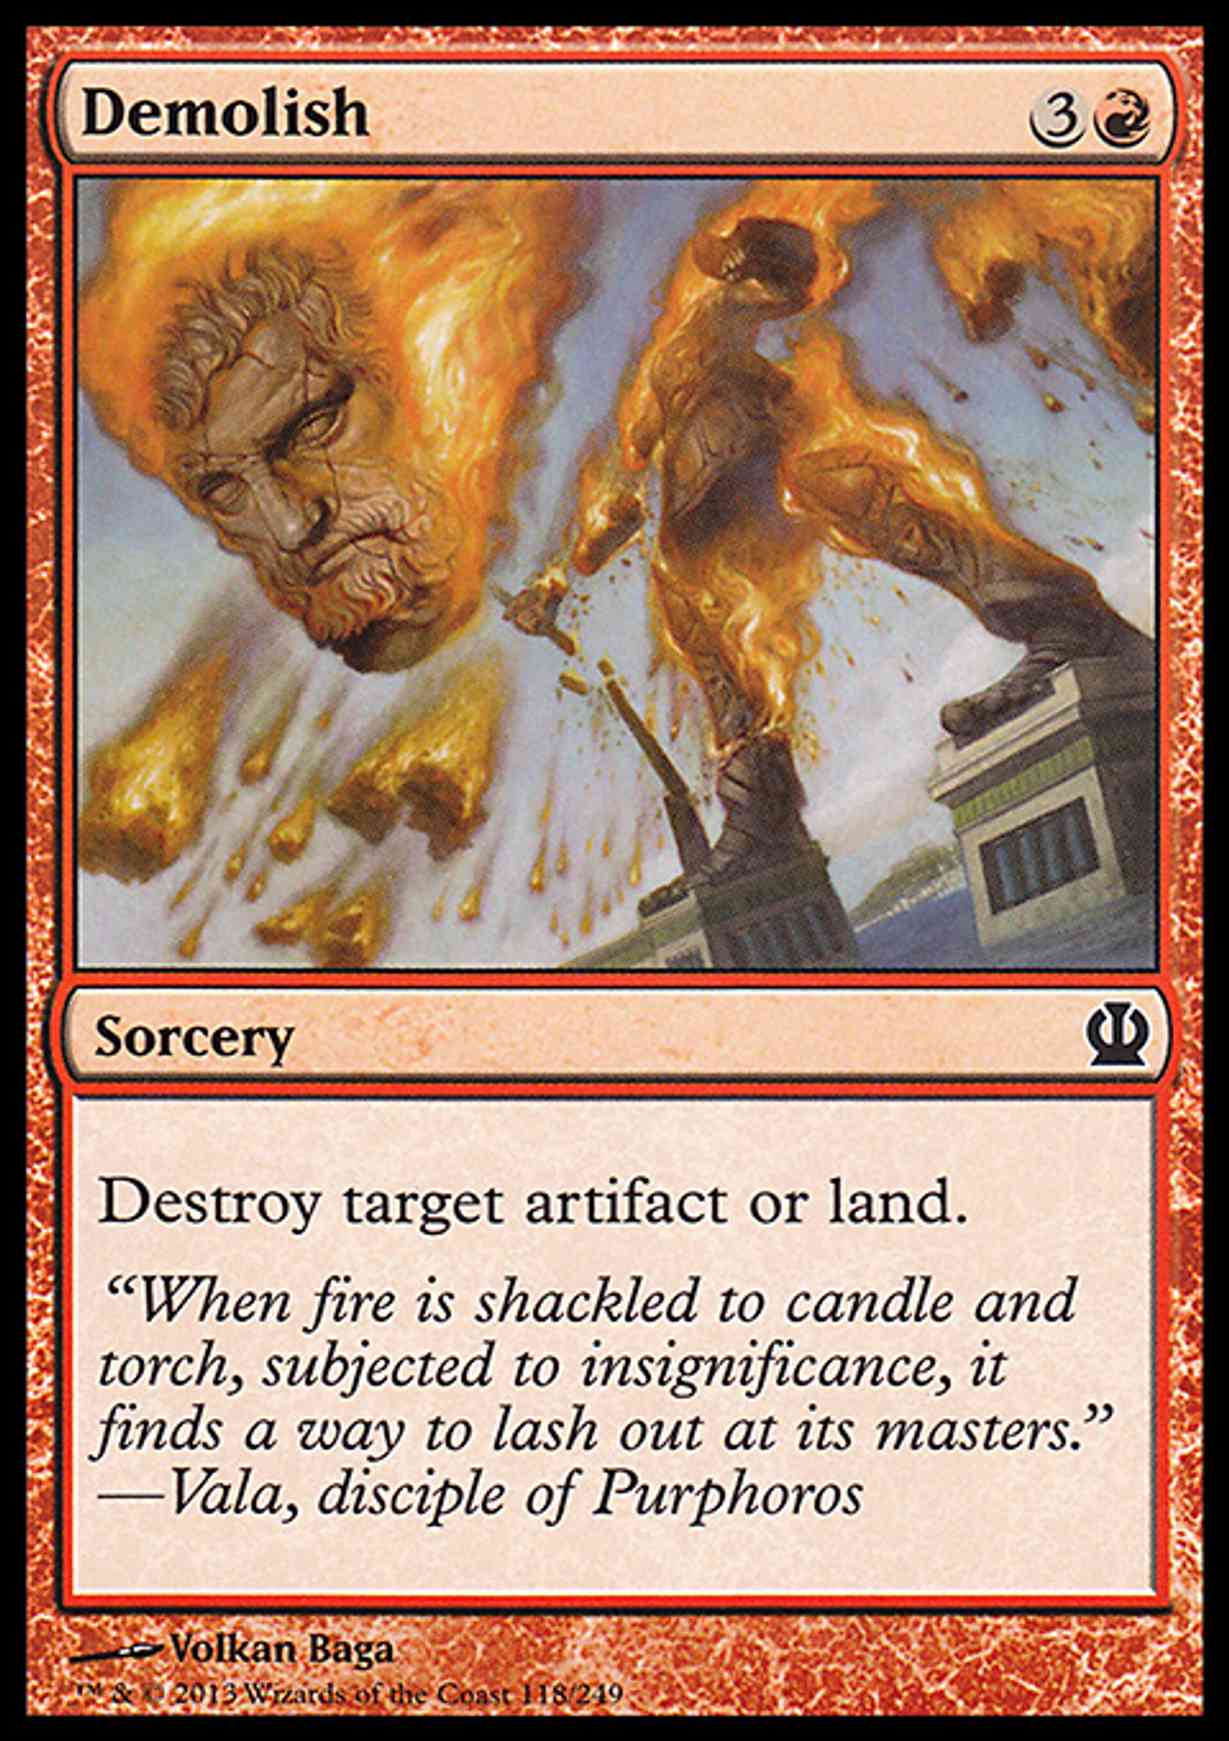 Demolish magic card front